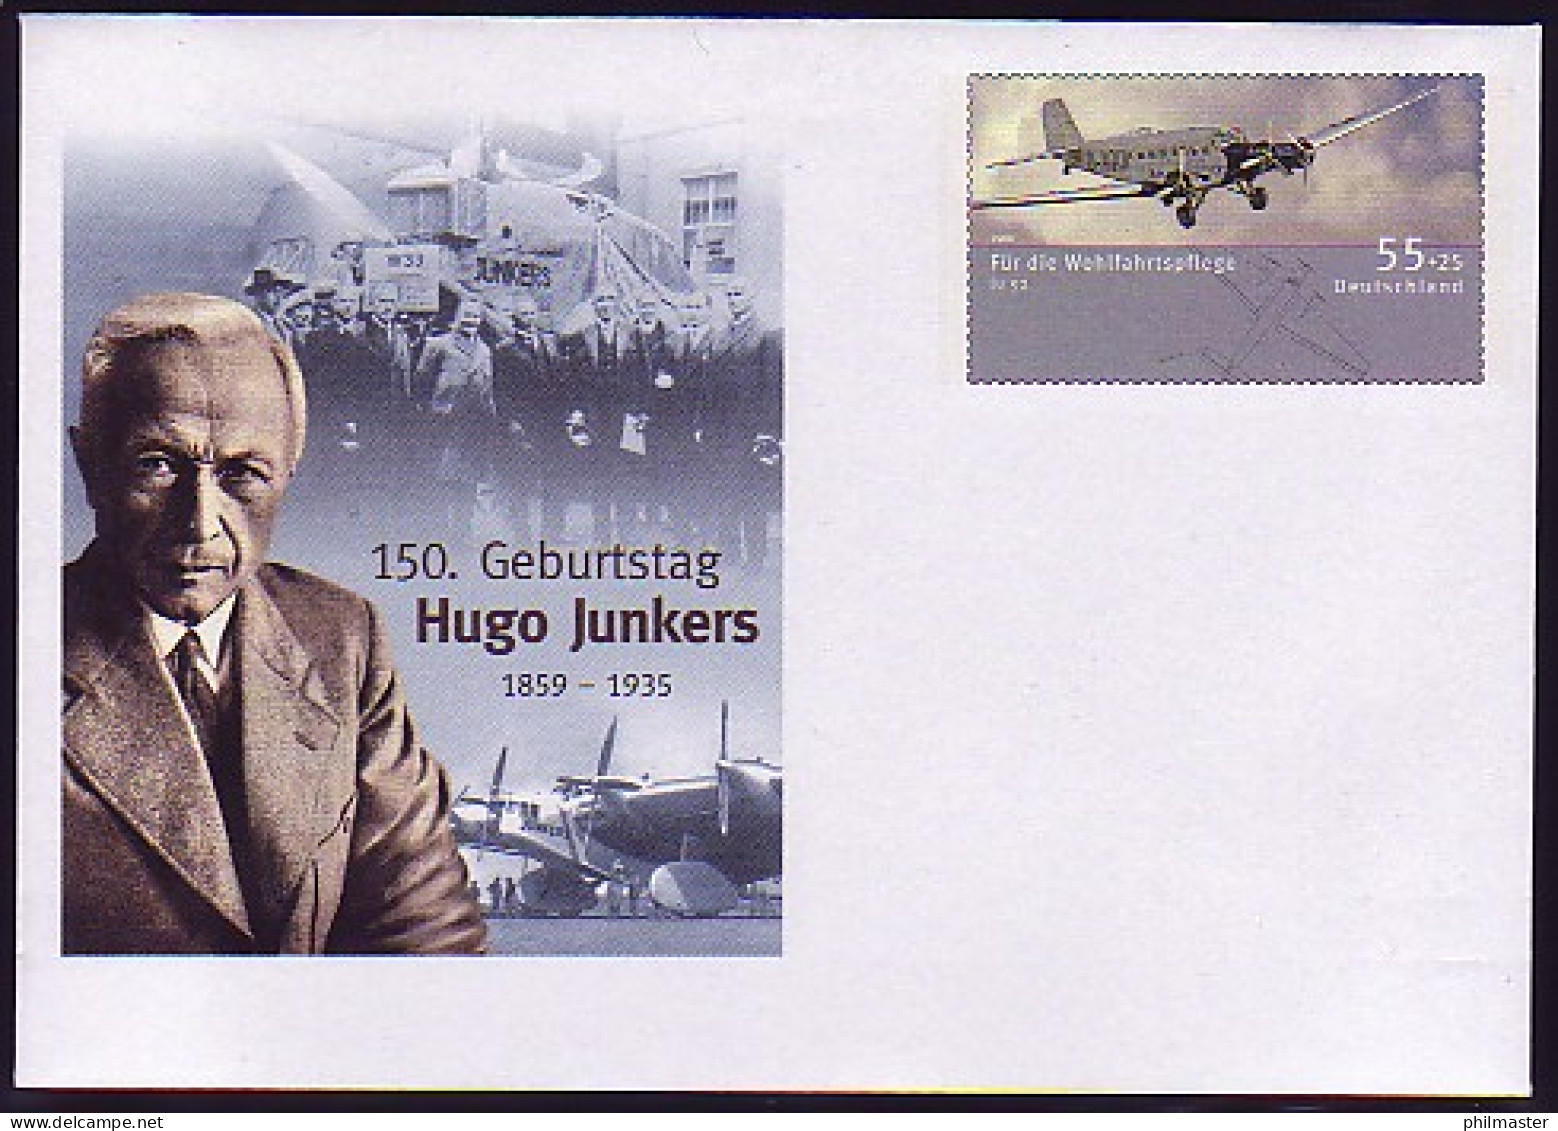 USo 173 Hugo Junkers 2009, Postfrisch - Enveloppes - Neuves